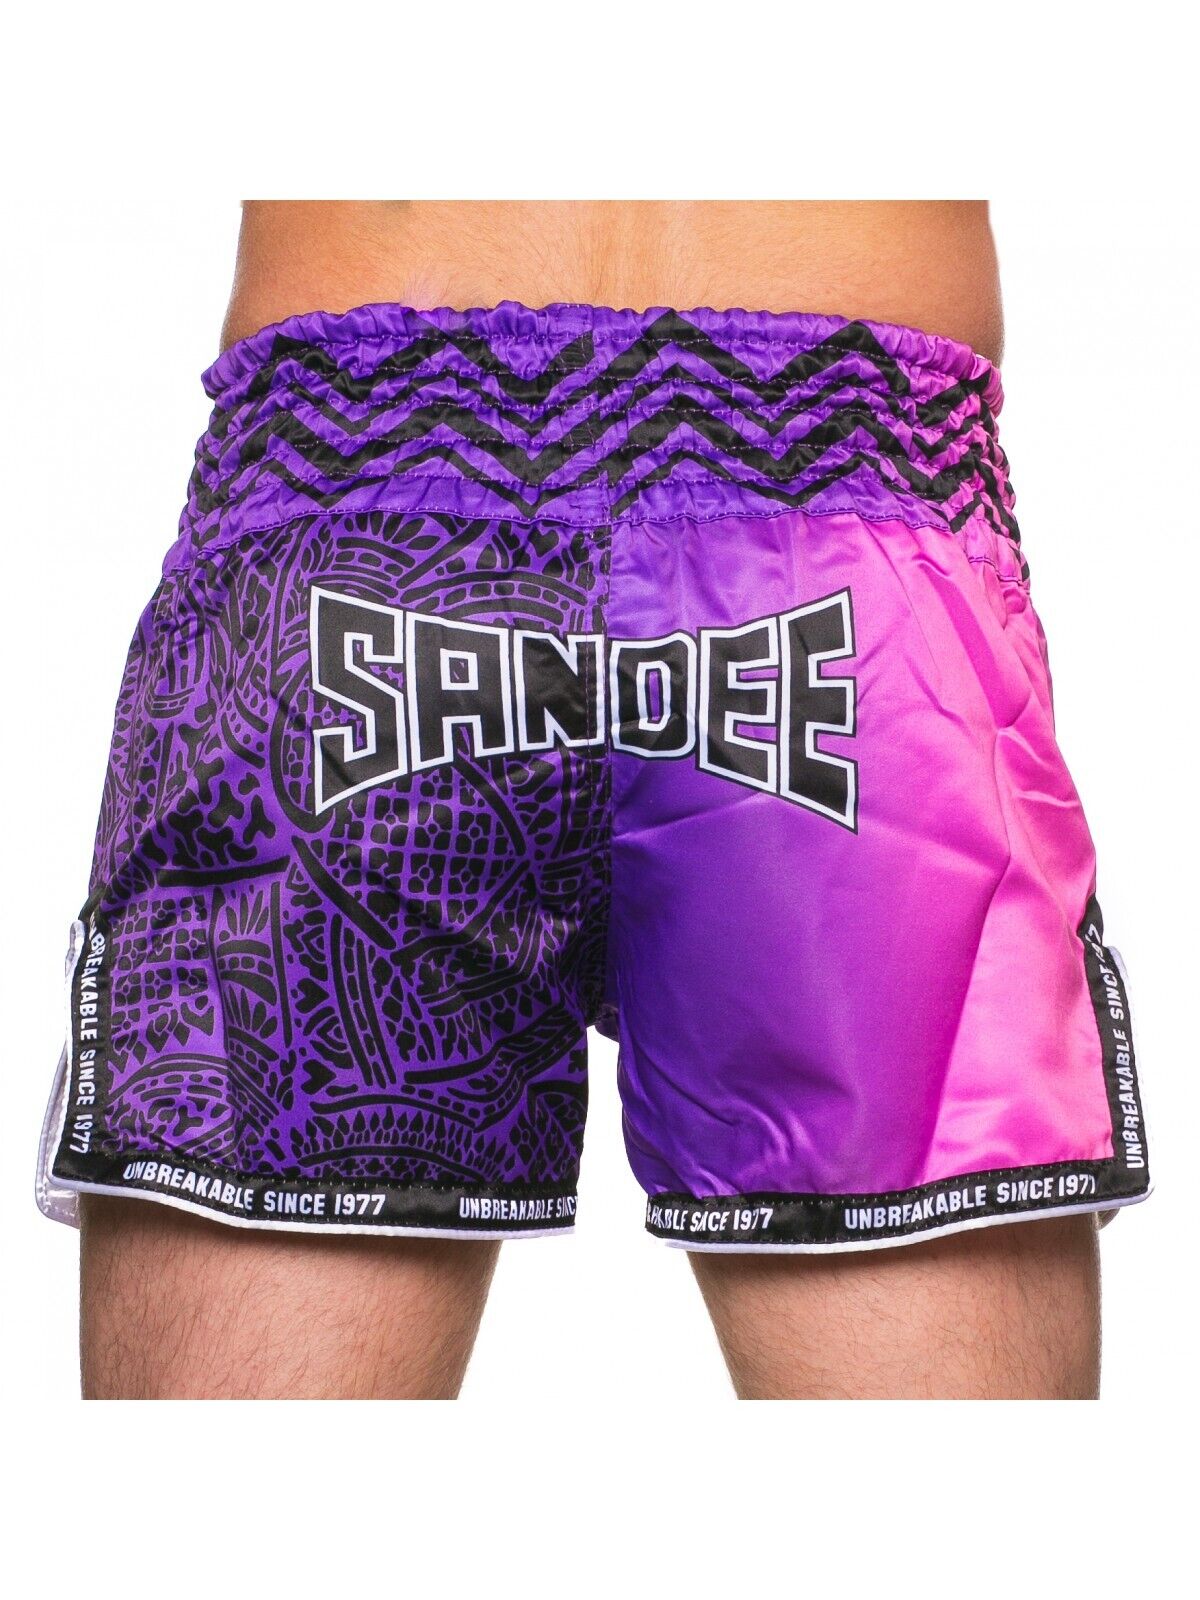 Sandee Muay Thai Shorts Mens Warrior K1 Kickboxing - Budo Online